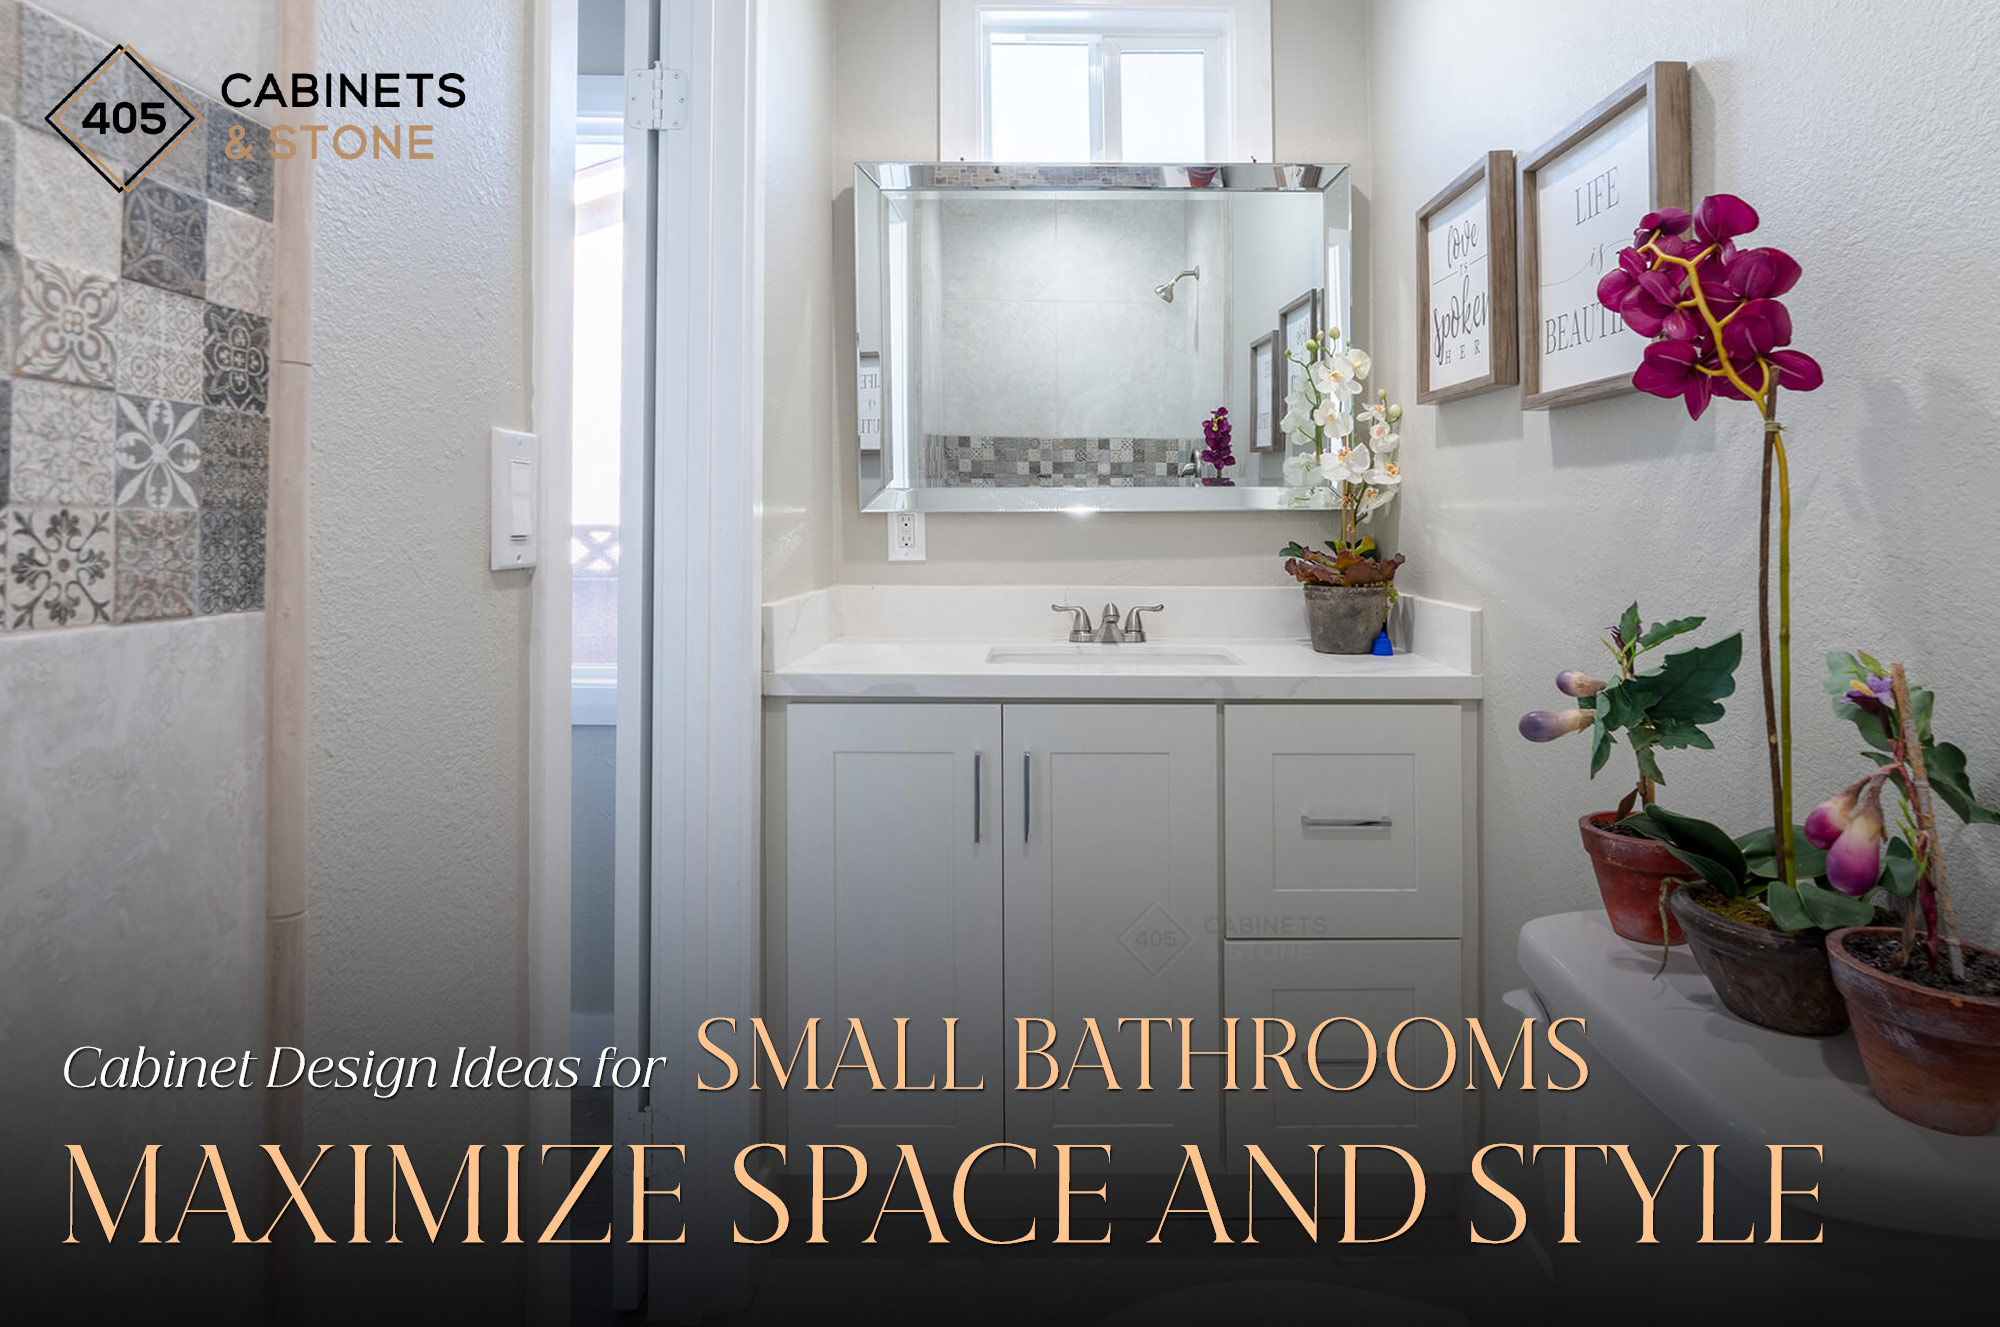 Cabinet Design Ideas for Small Bathrooms - 405 Cabinets & Stone